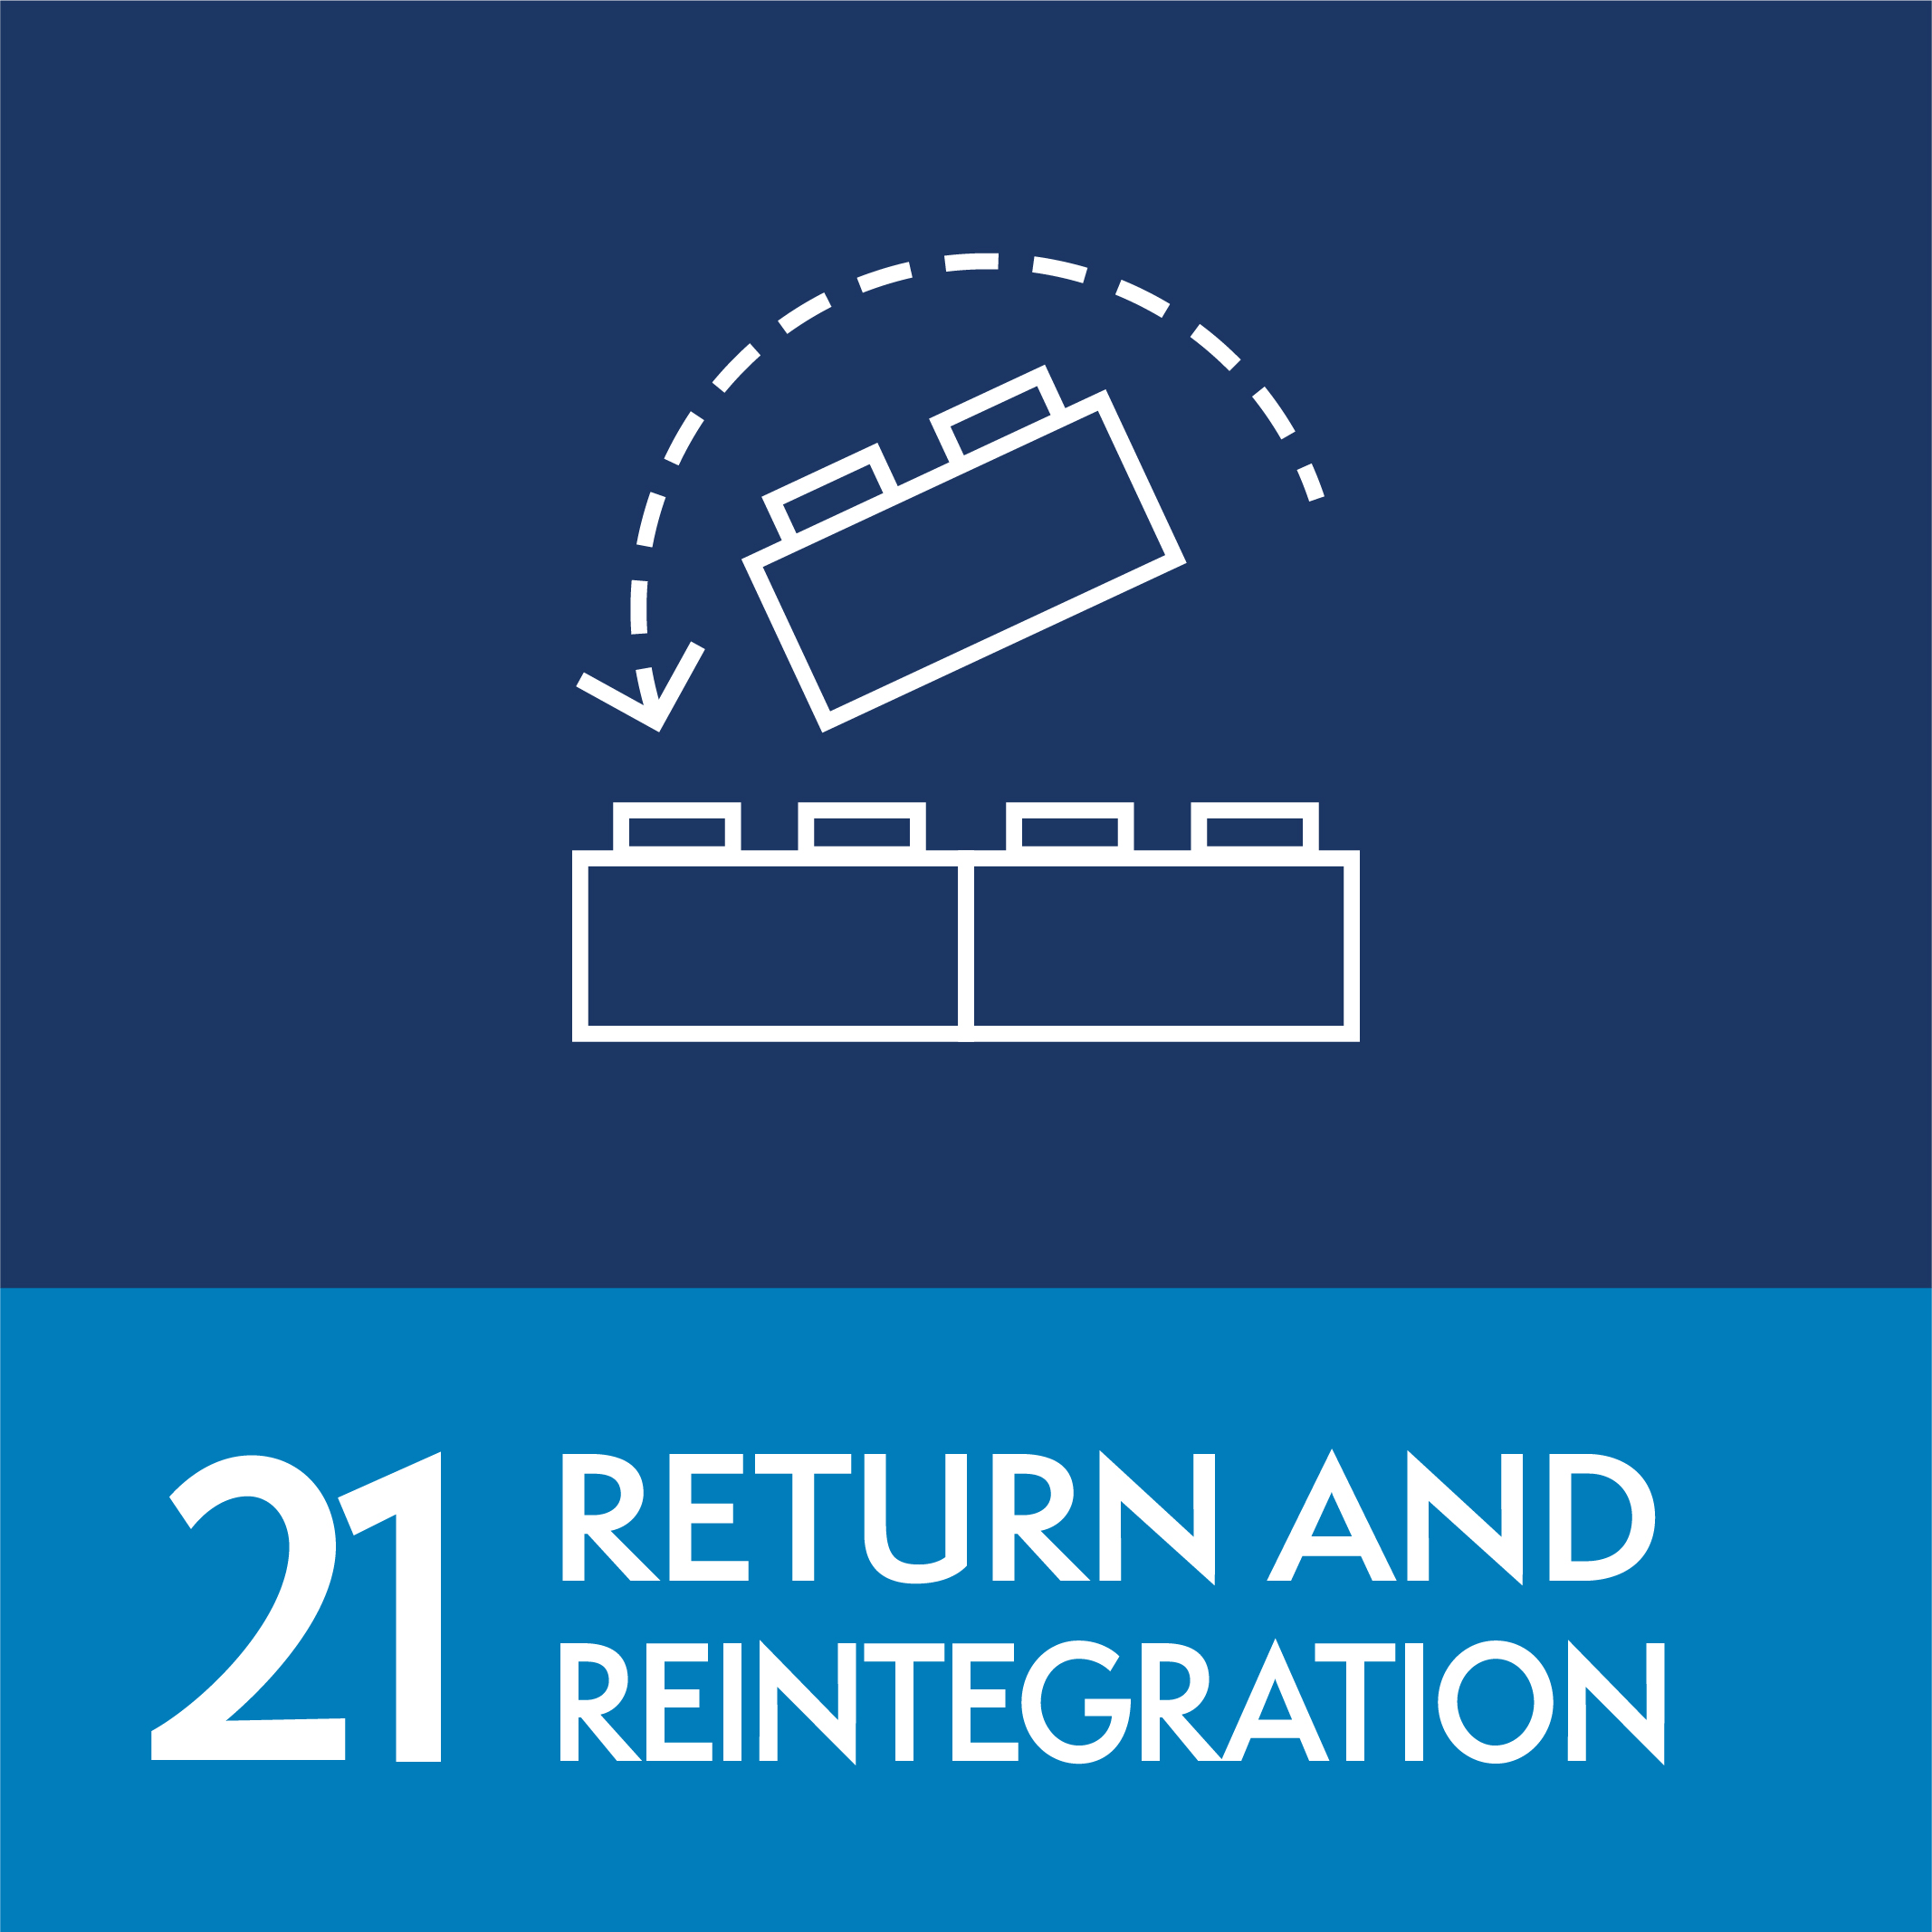 21 - Return and reintegration